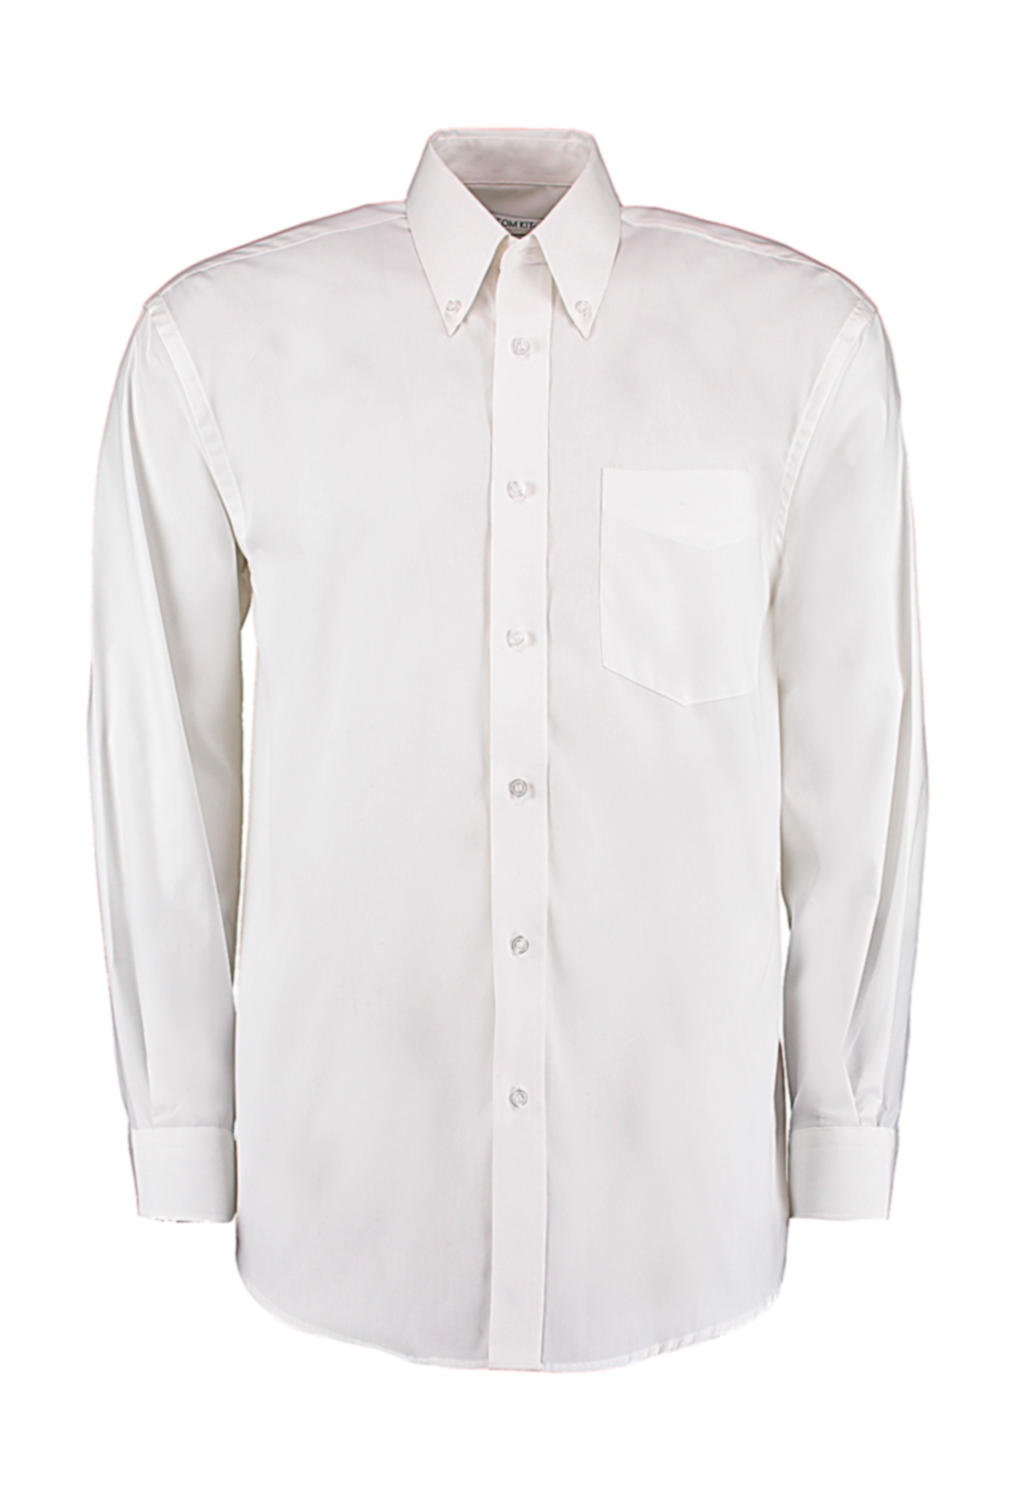 778.11 / Classic Fit Premium Oxford Shirt